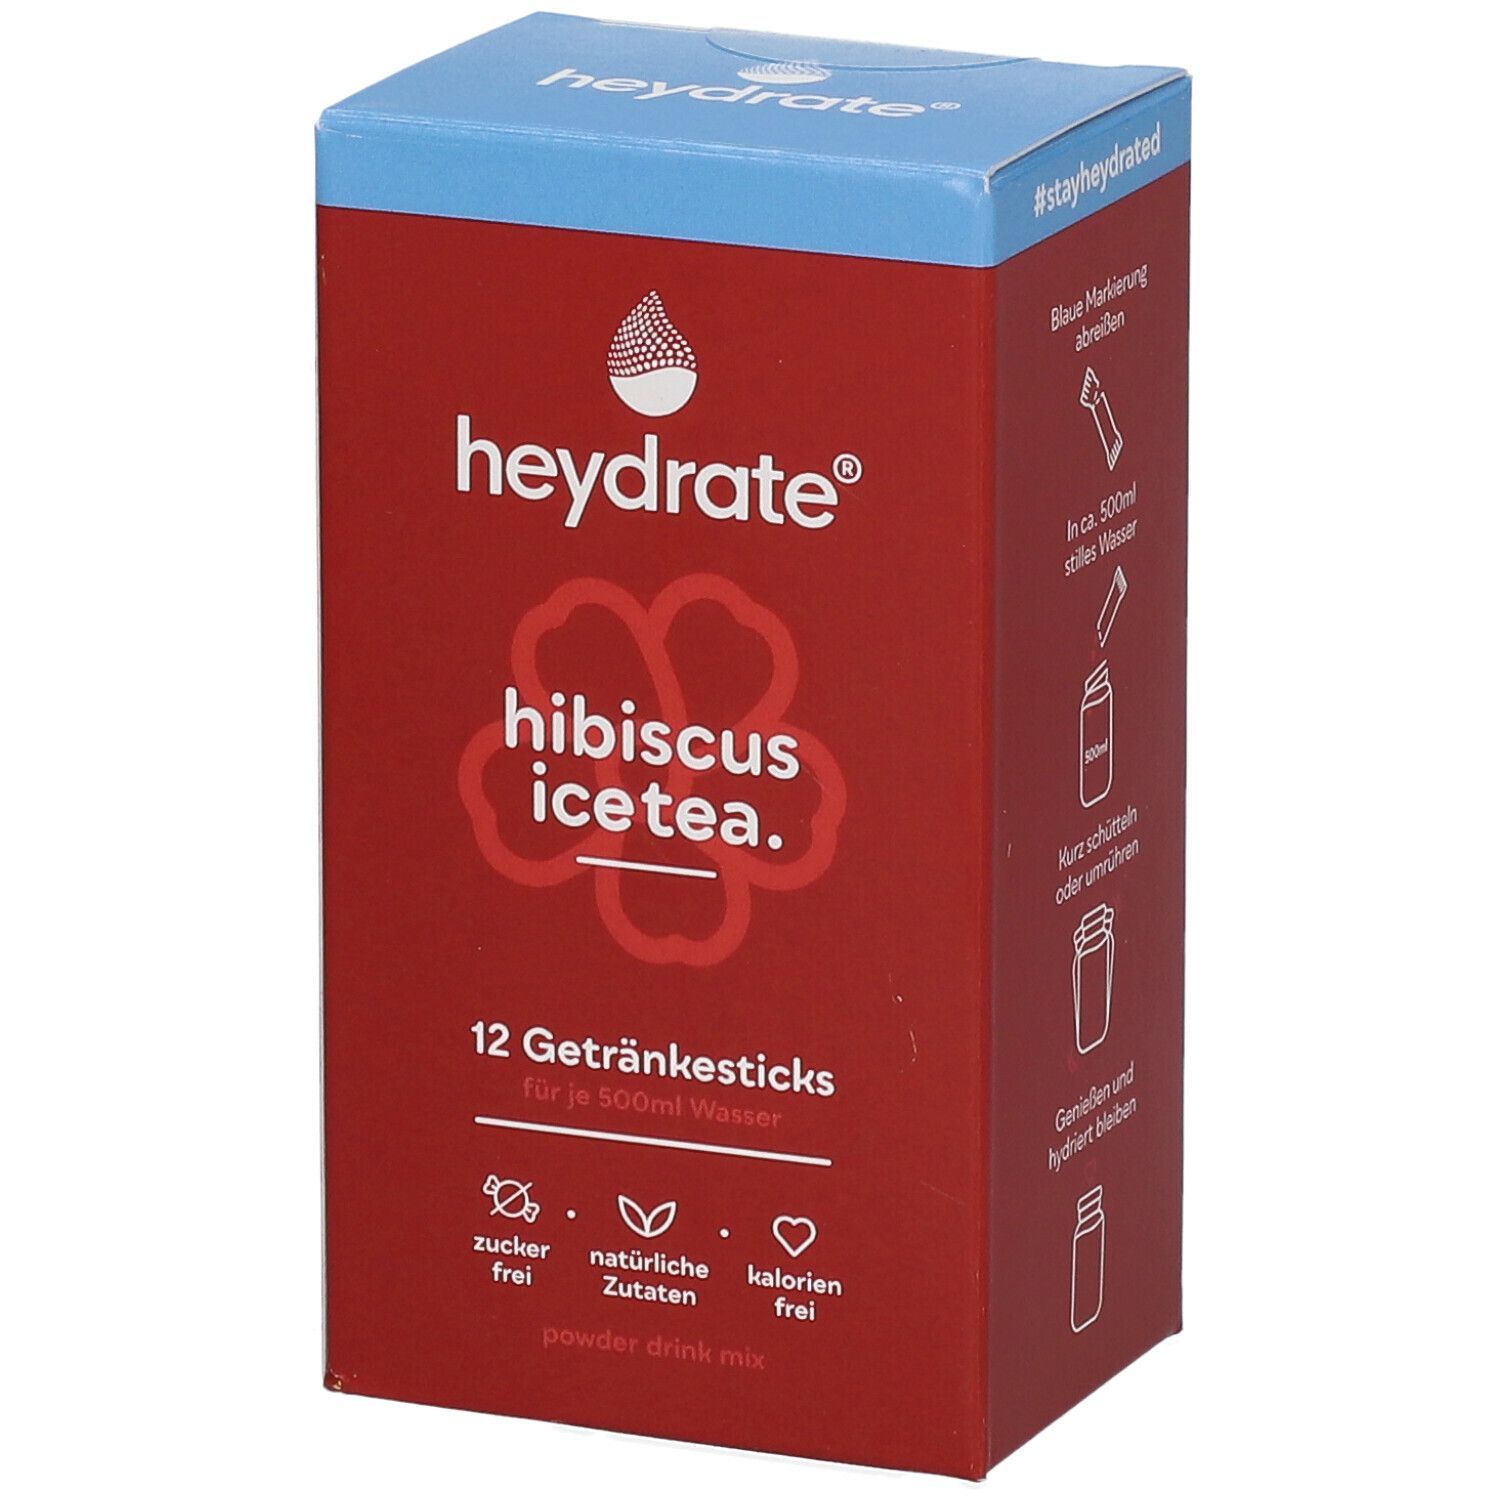 heydrate® hibiscus icetea